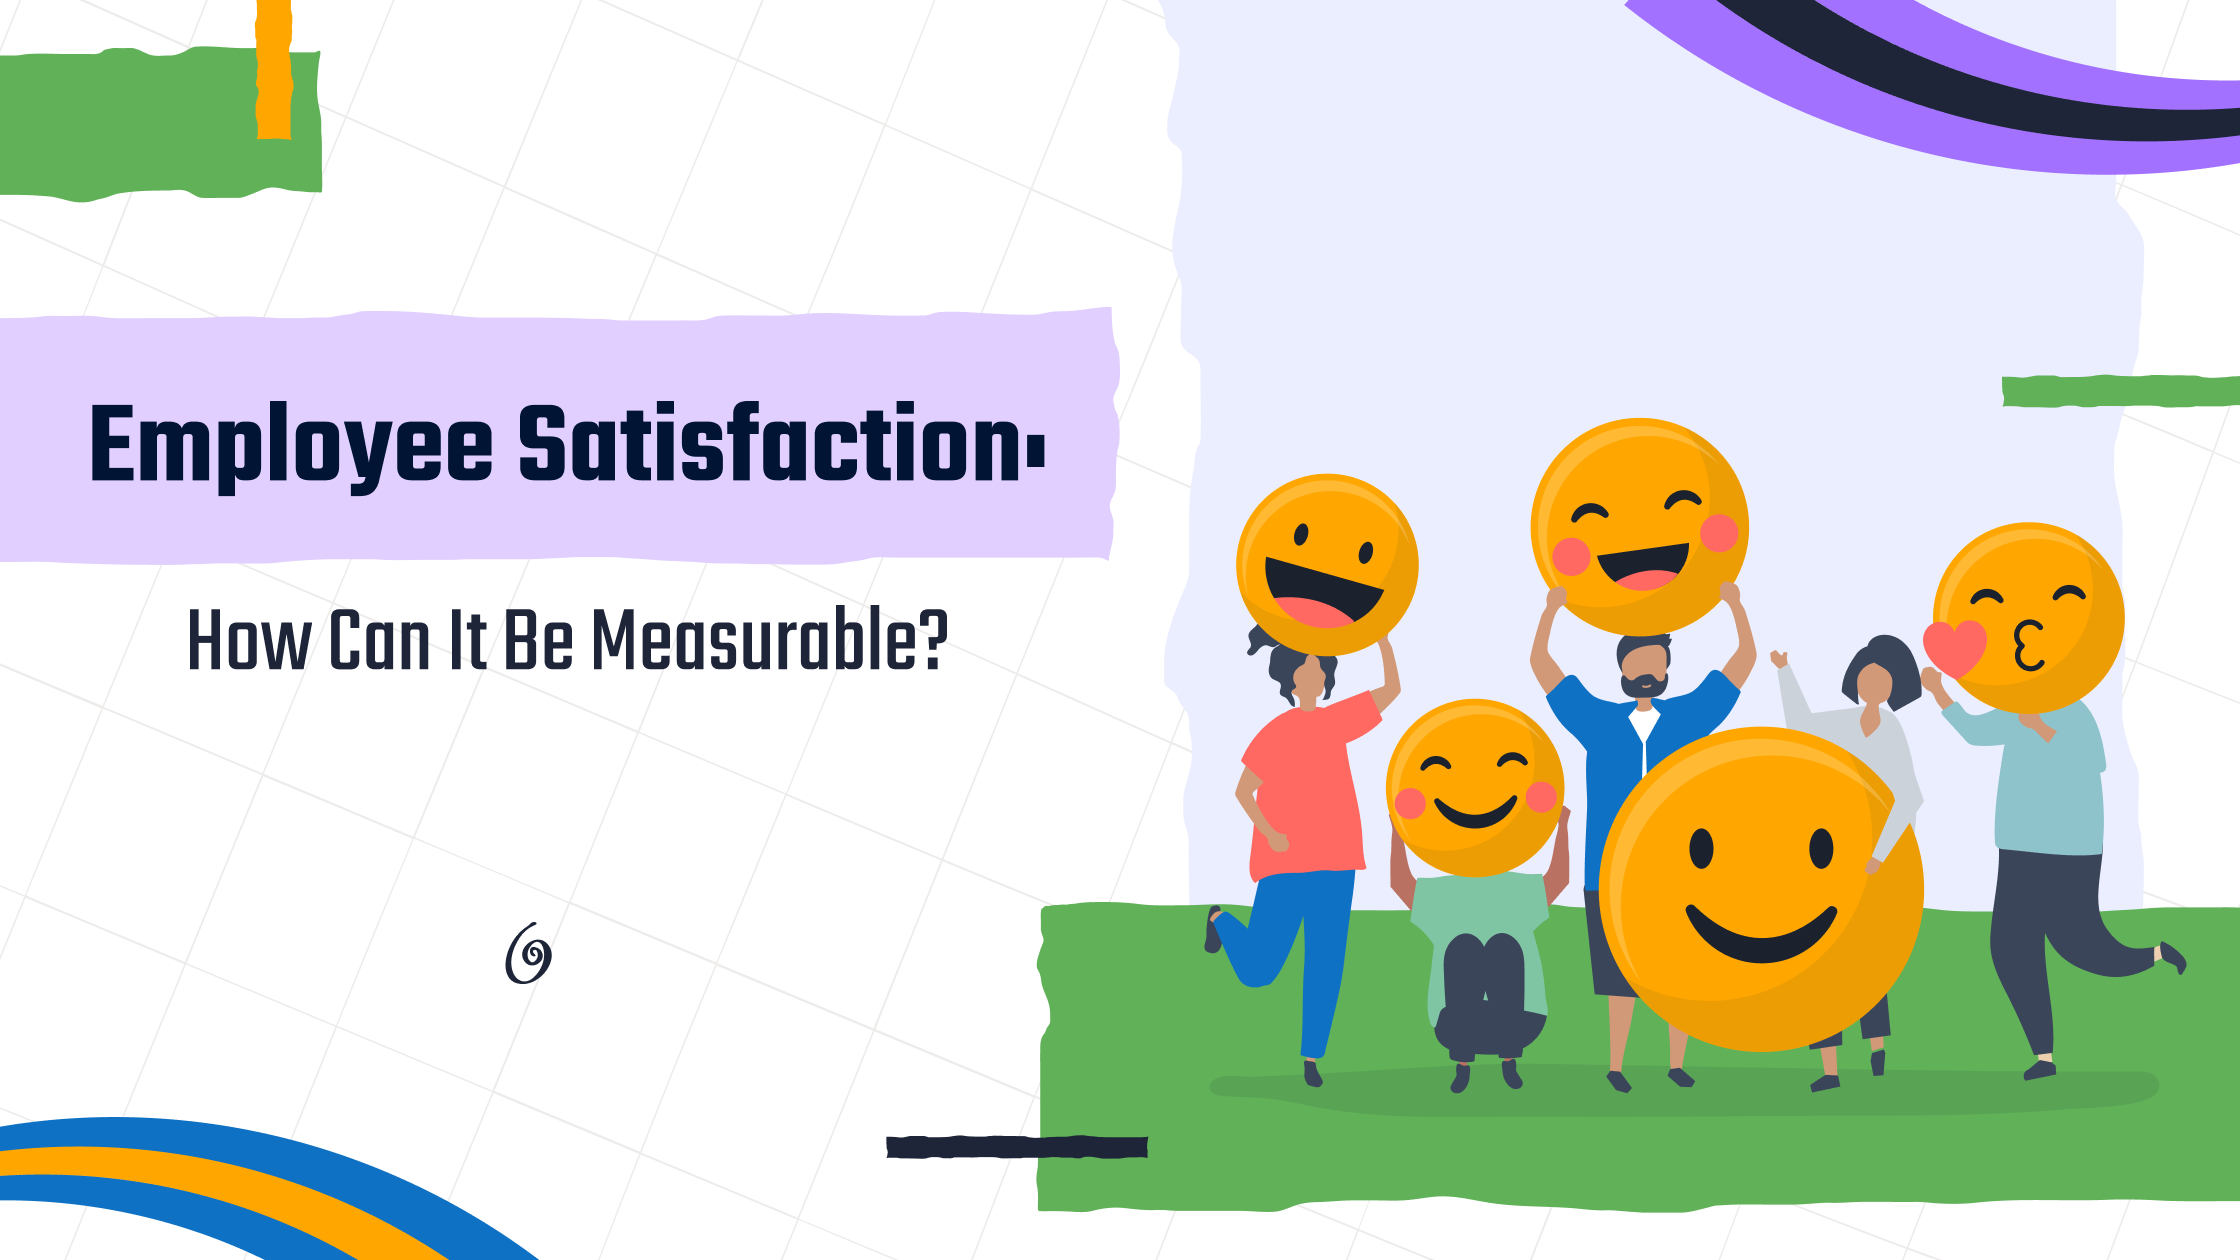 Measuring Employee Satisfaction